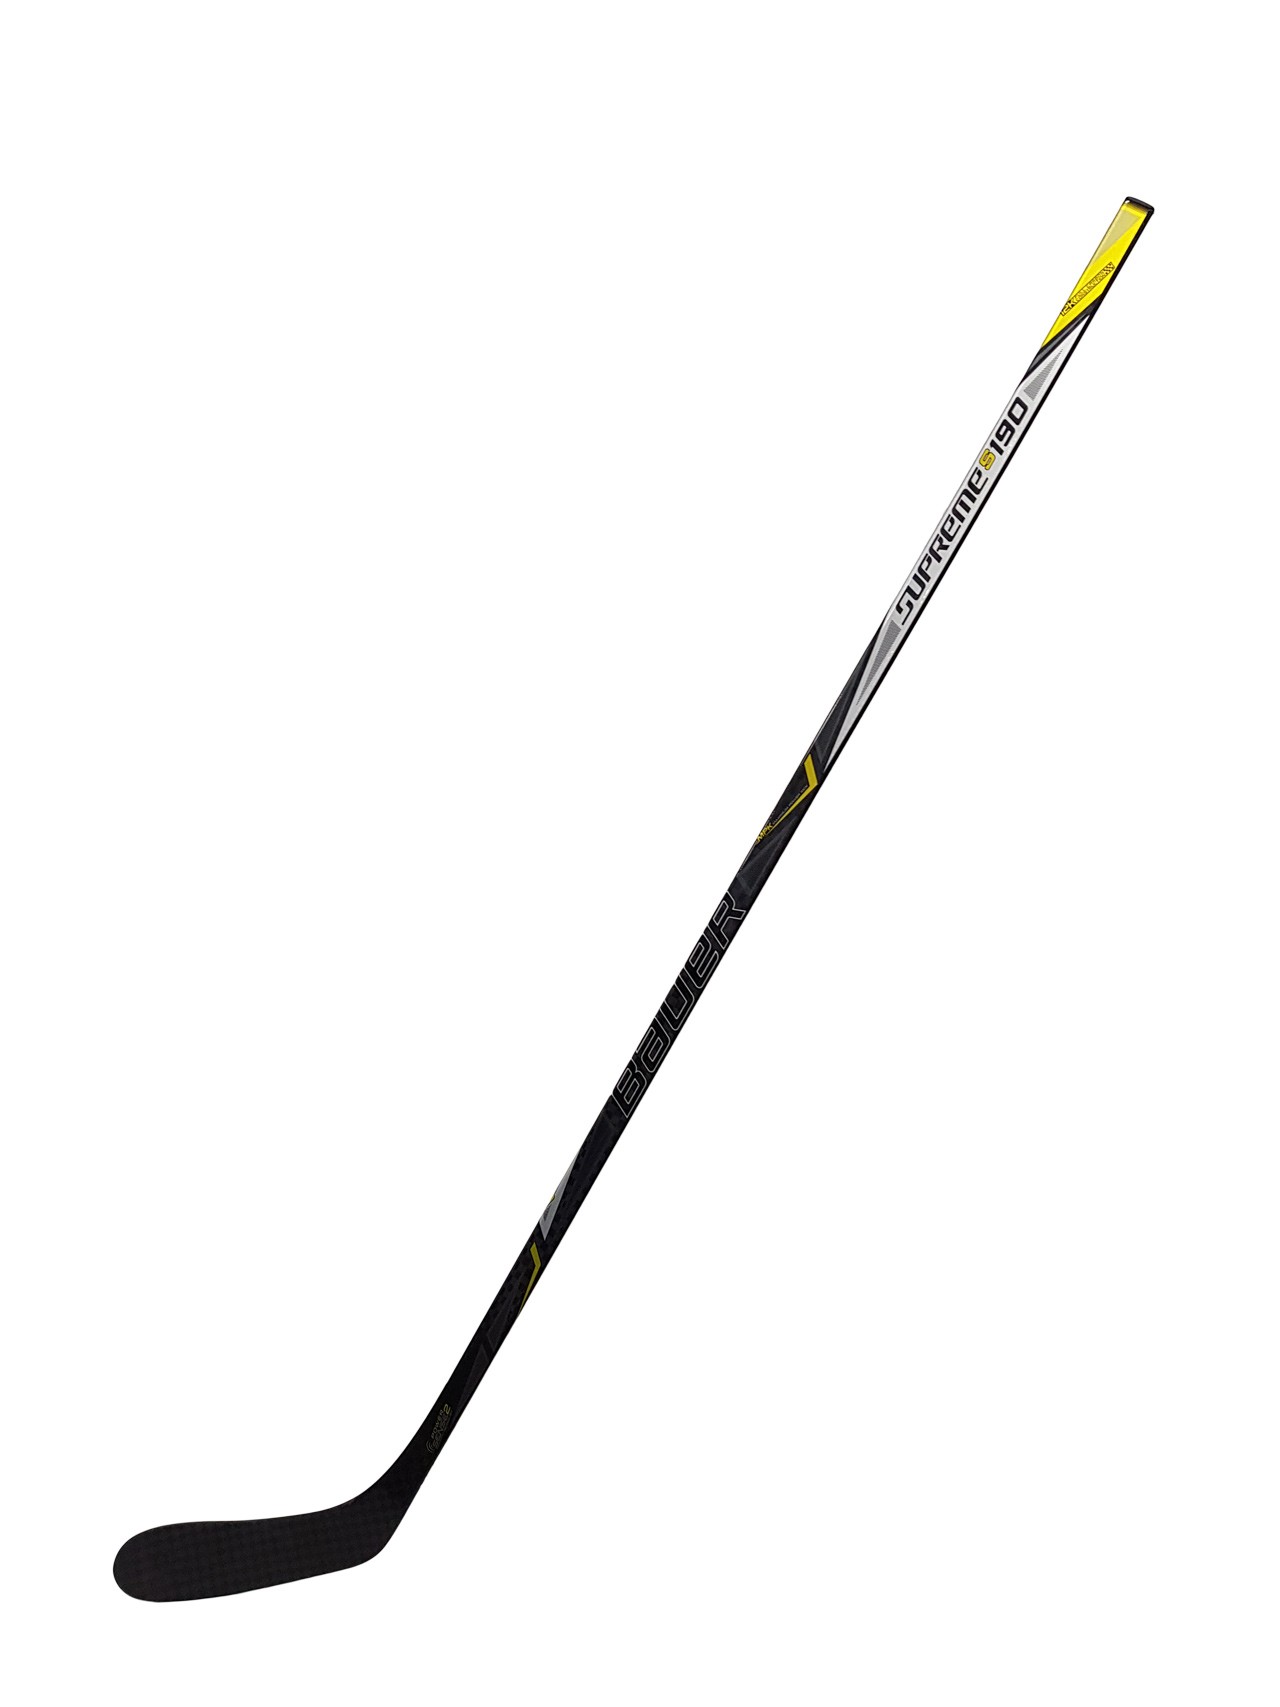 BAUER Supreme S190 S17 Senior Composite Hockey Stick